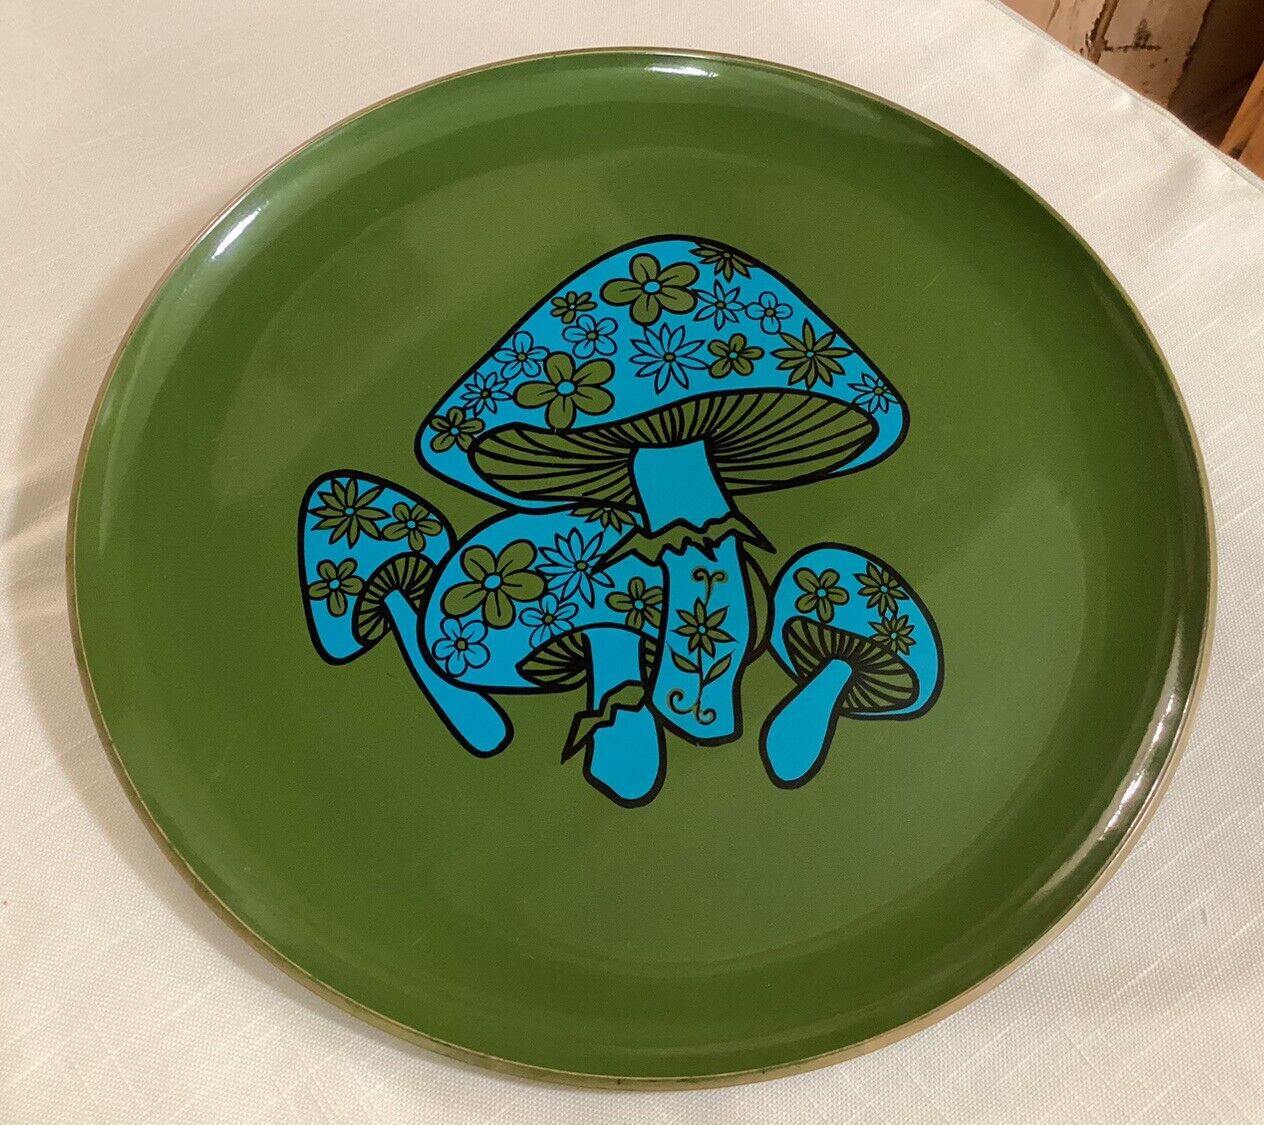 Vintage 1970’s Mod Takahashi Avocado Green & Turquoise Blue Mushroom Plate Tray